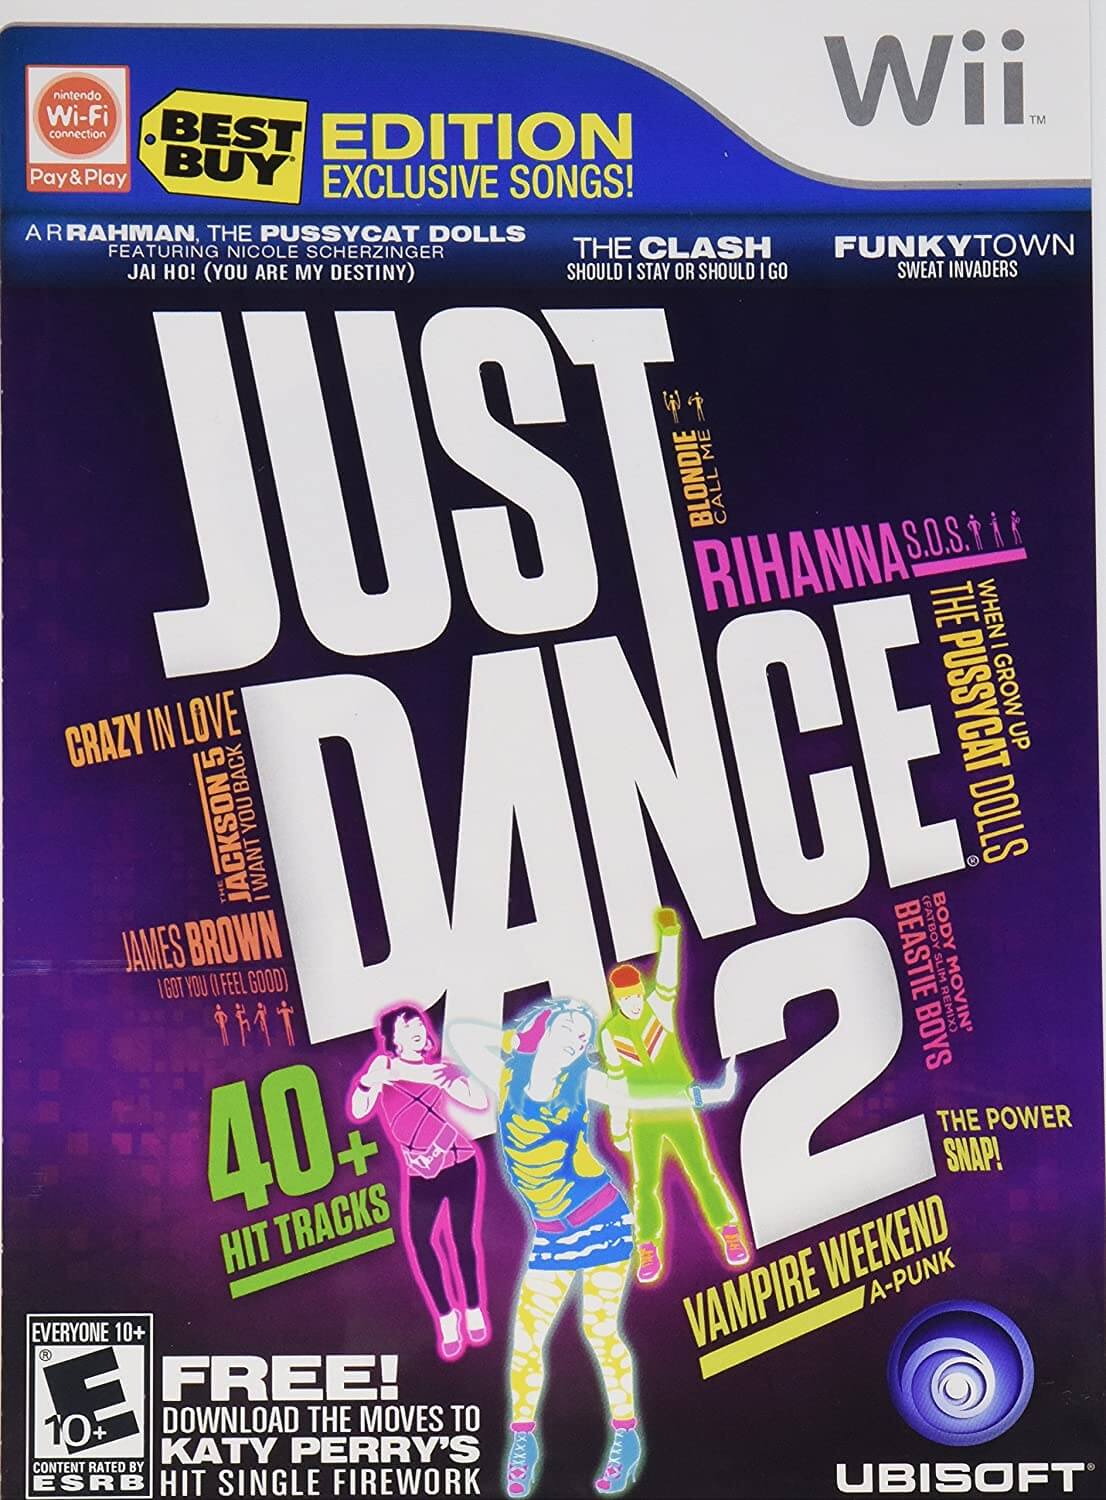 Just Dance 2: Best Buy Edition